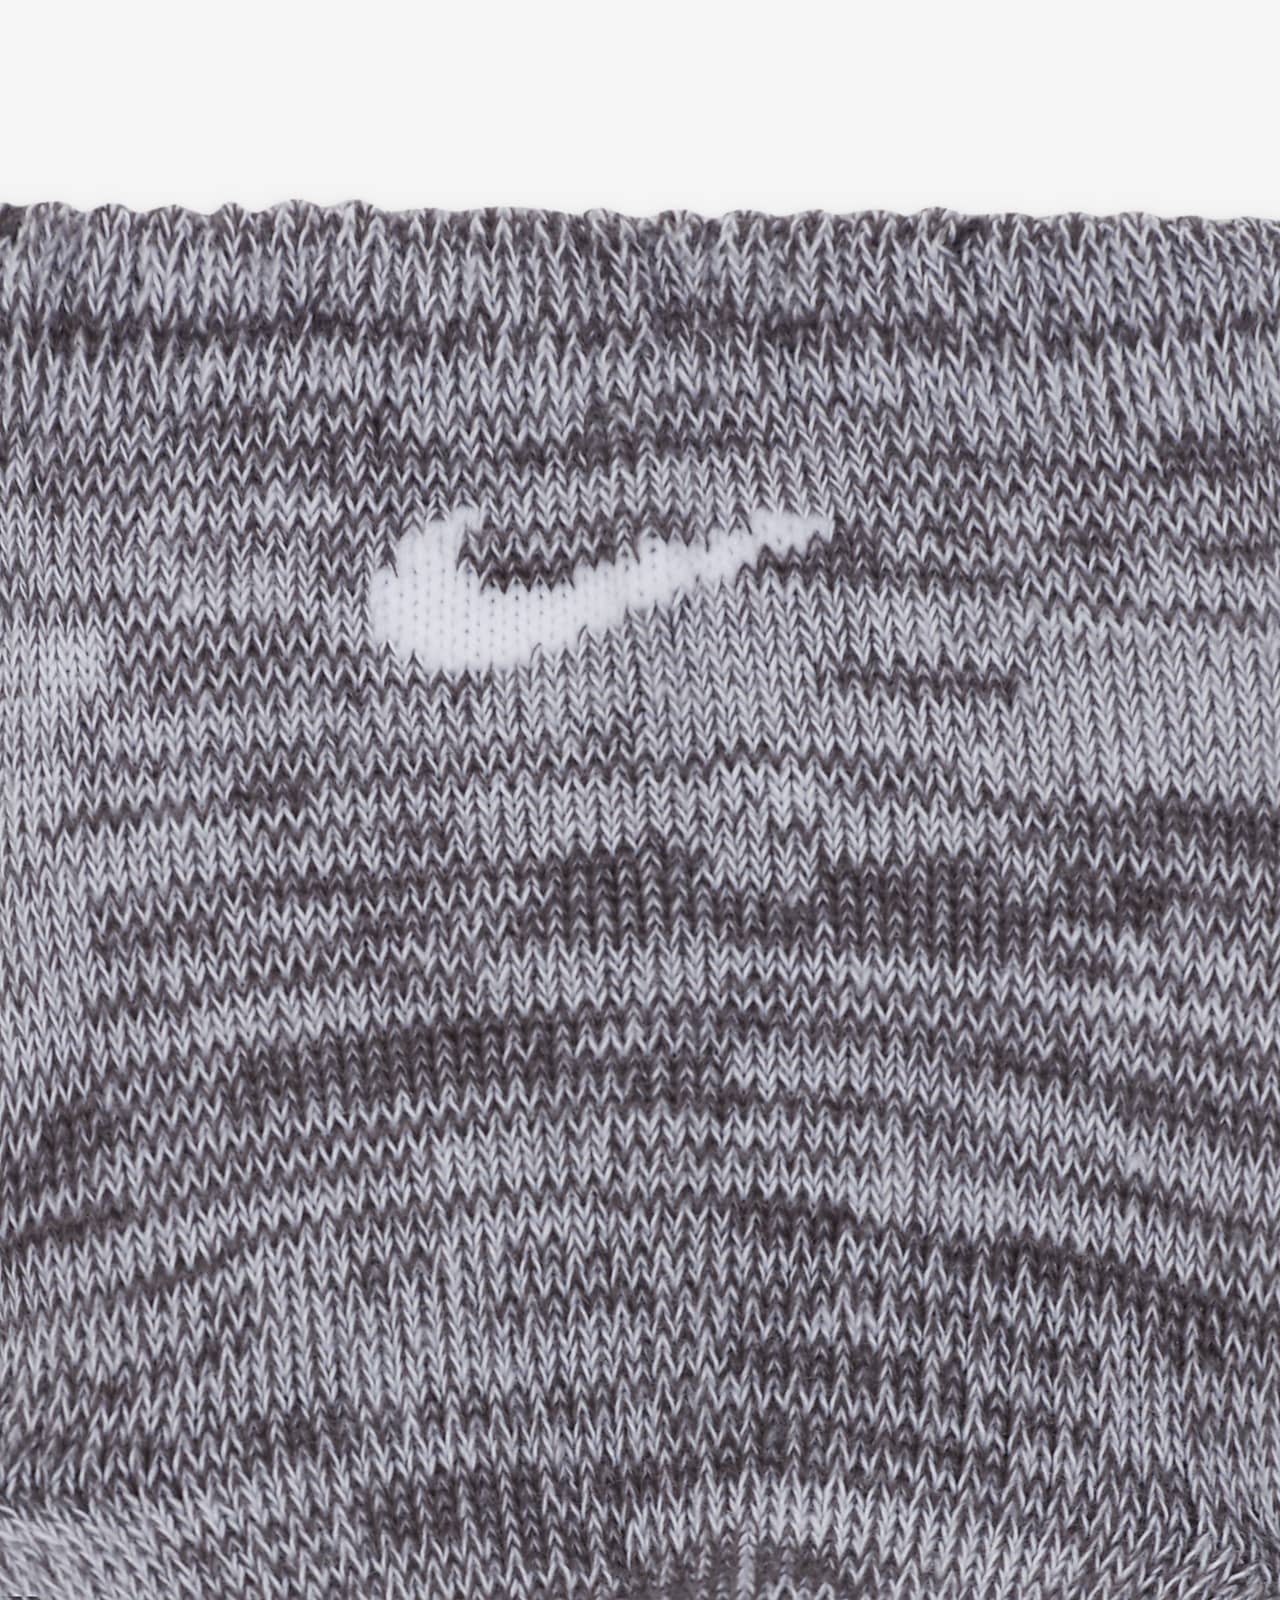 Nike Everyday Lightweight No-Show Training Socks (6 Pairs). Nike JP